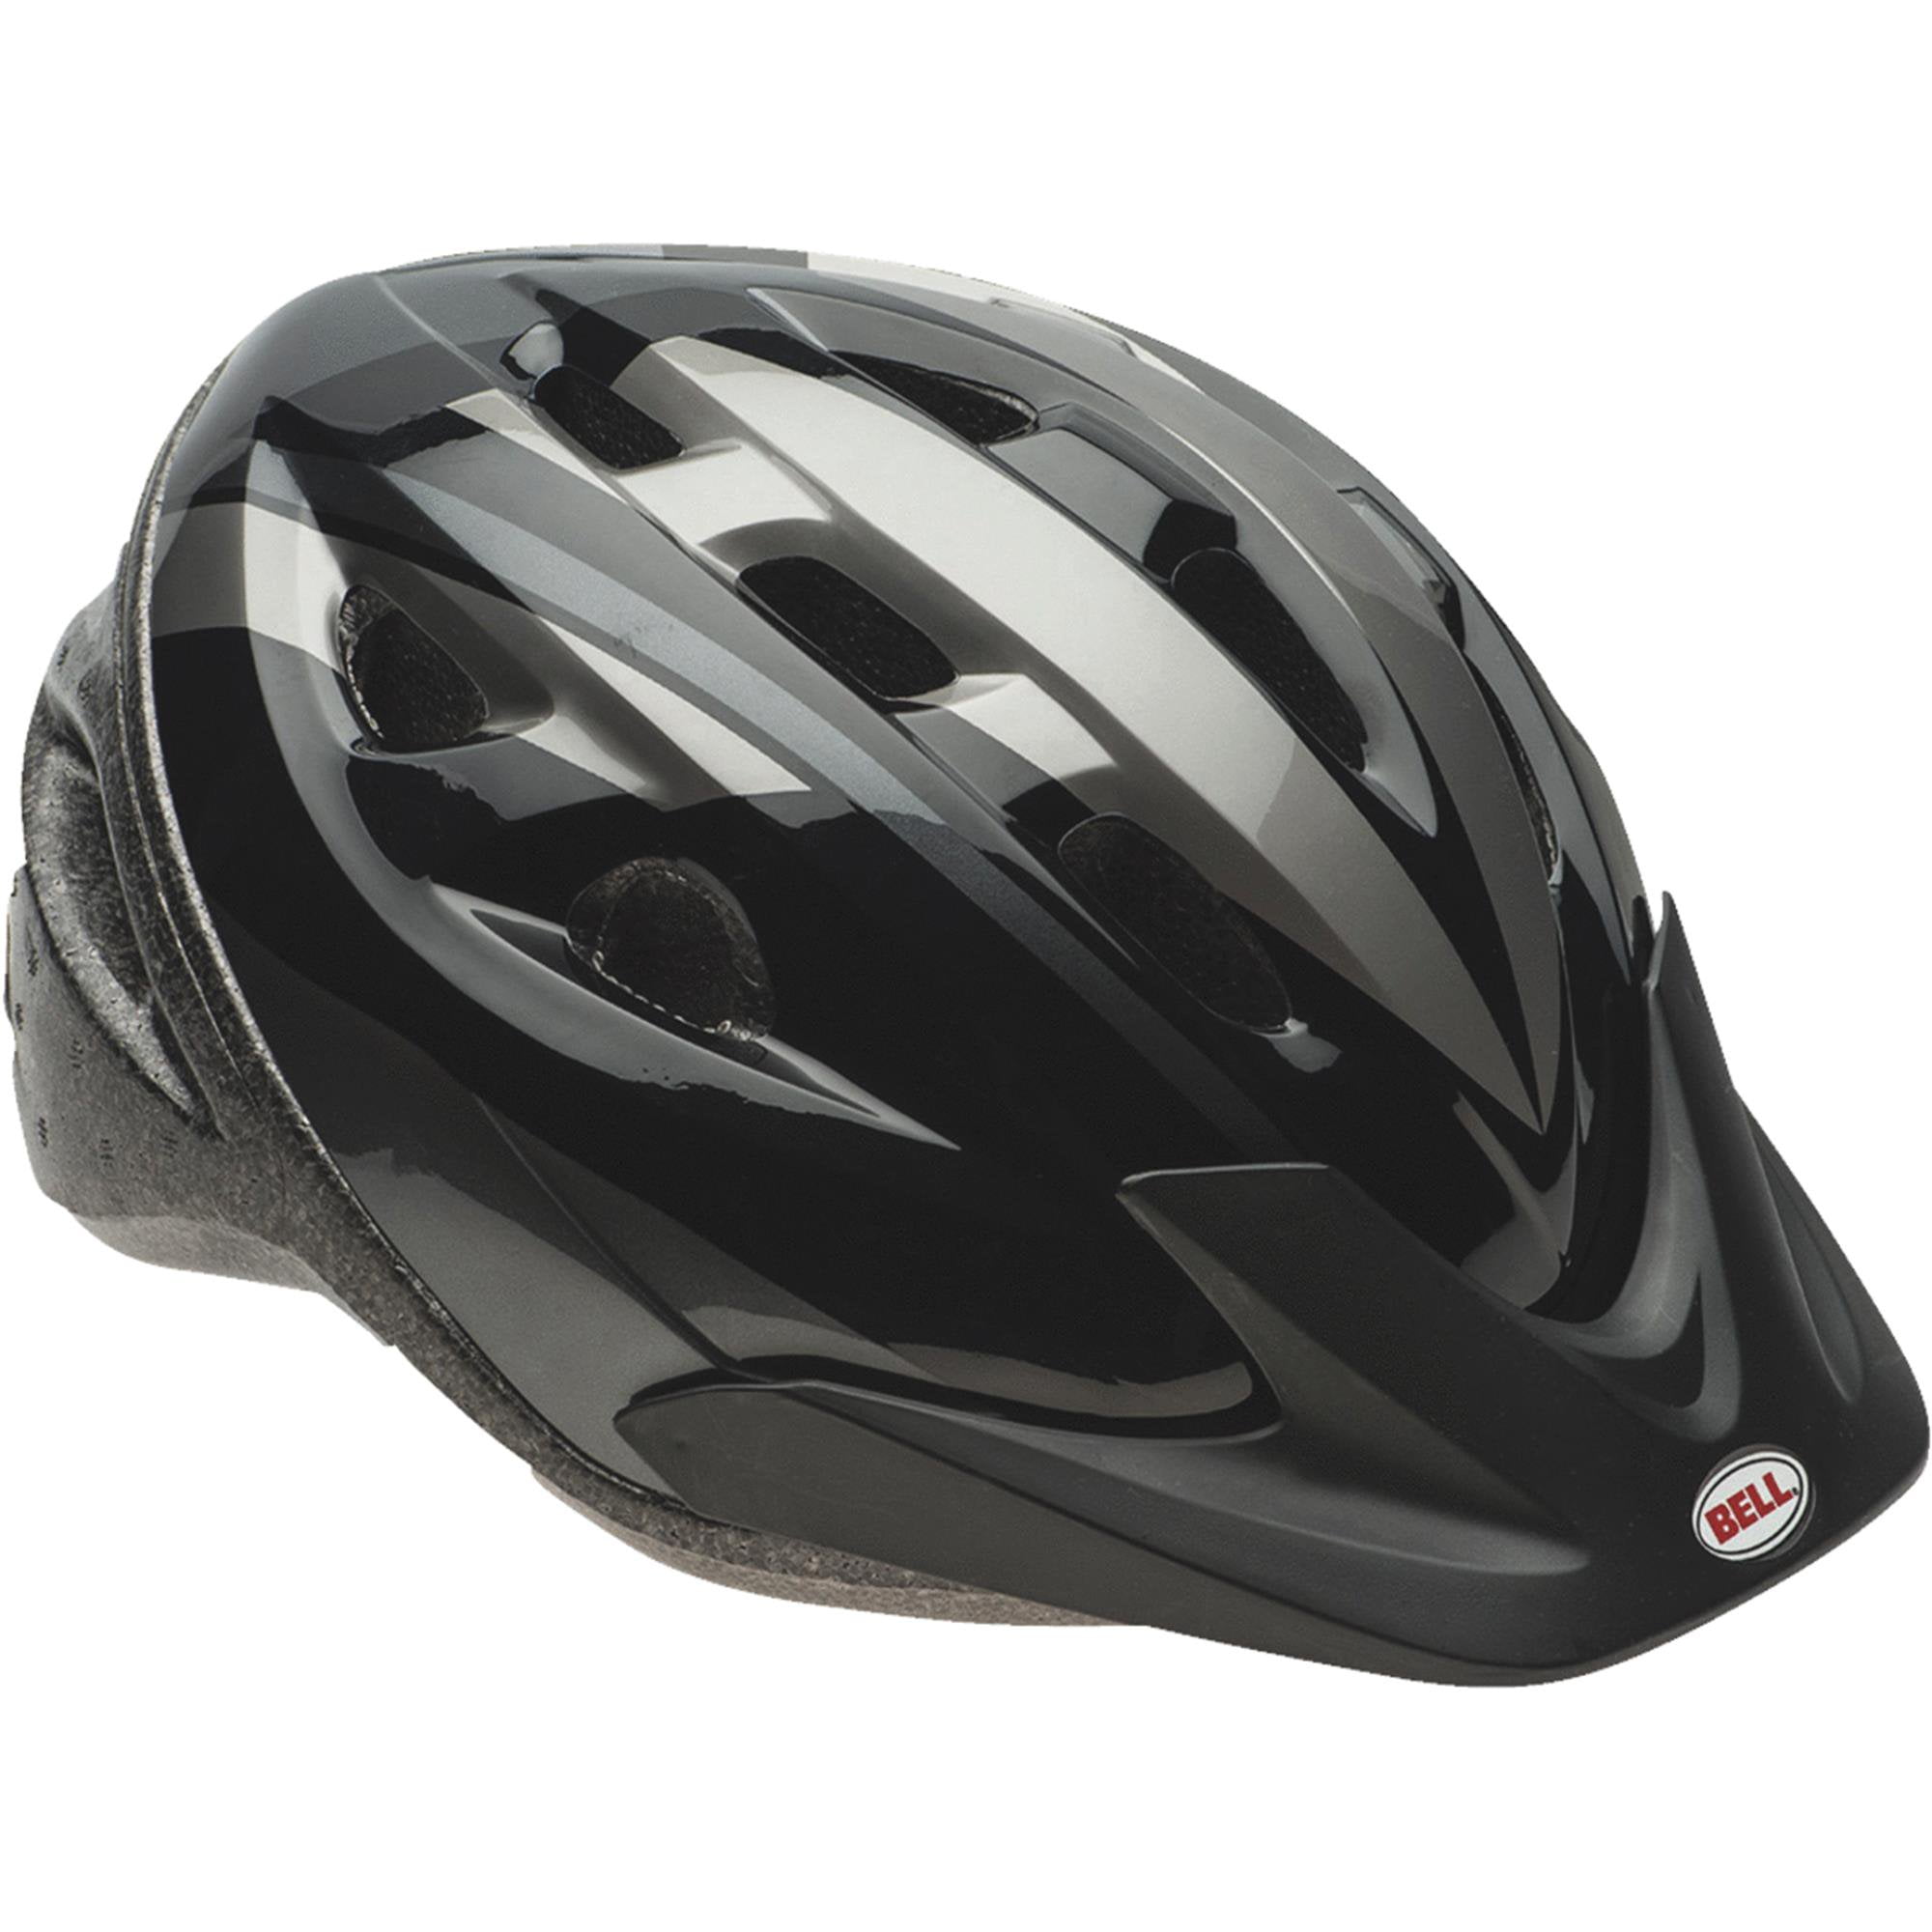 Blue Adjustable Fit Details about   Schwinn Adult Bike Helmet Intercept Age 14 